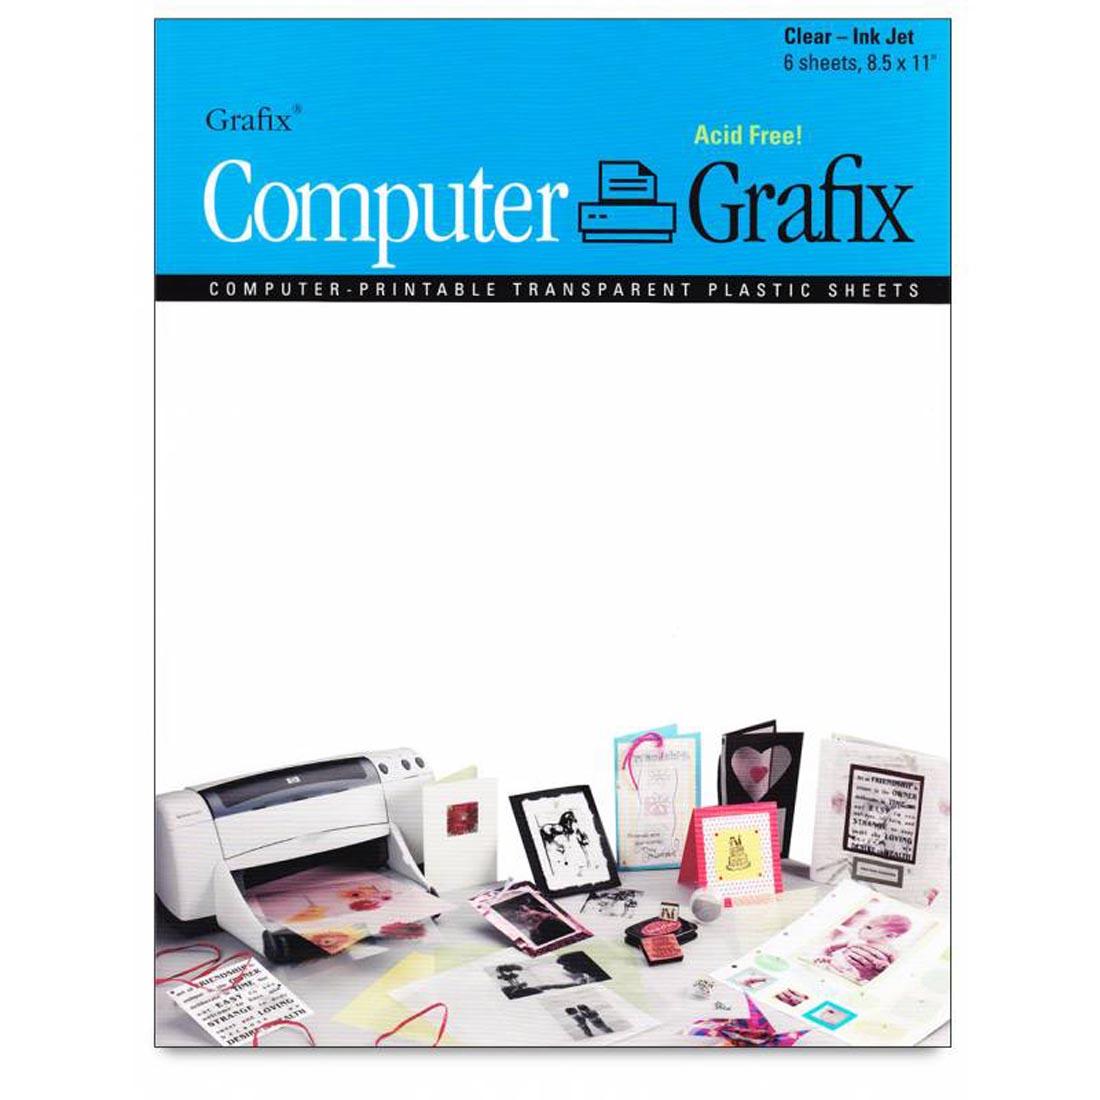 Grafix Clear Ink Jet Computer-Printable Transparent Plastic Sheets